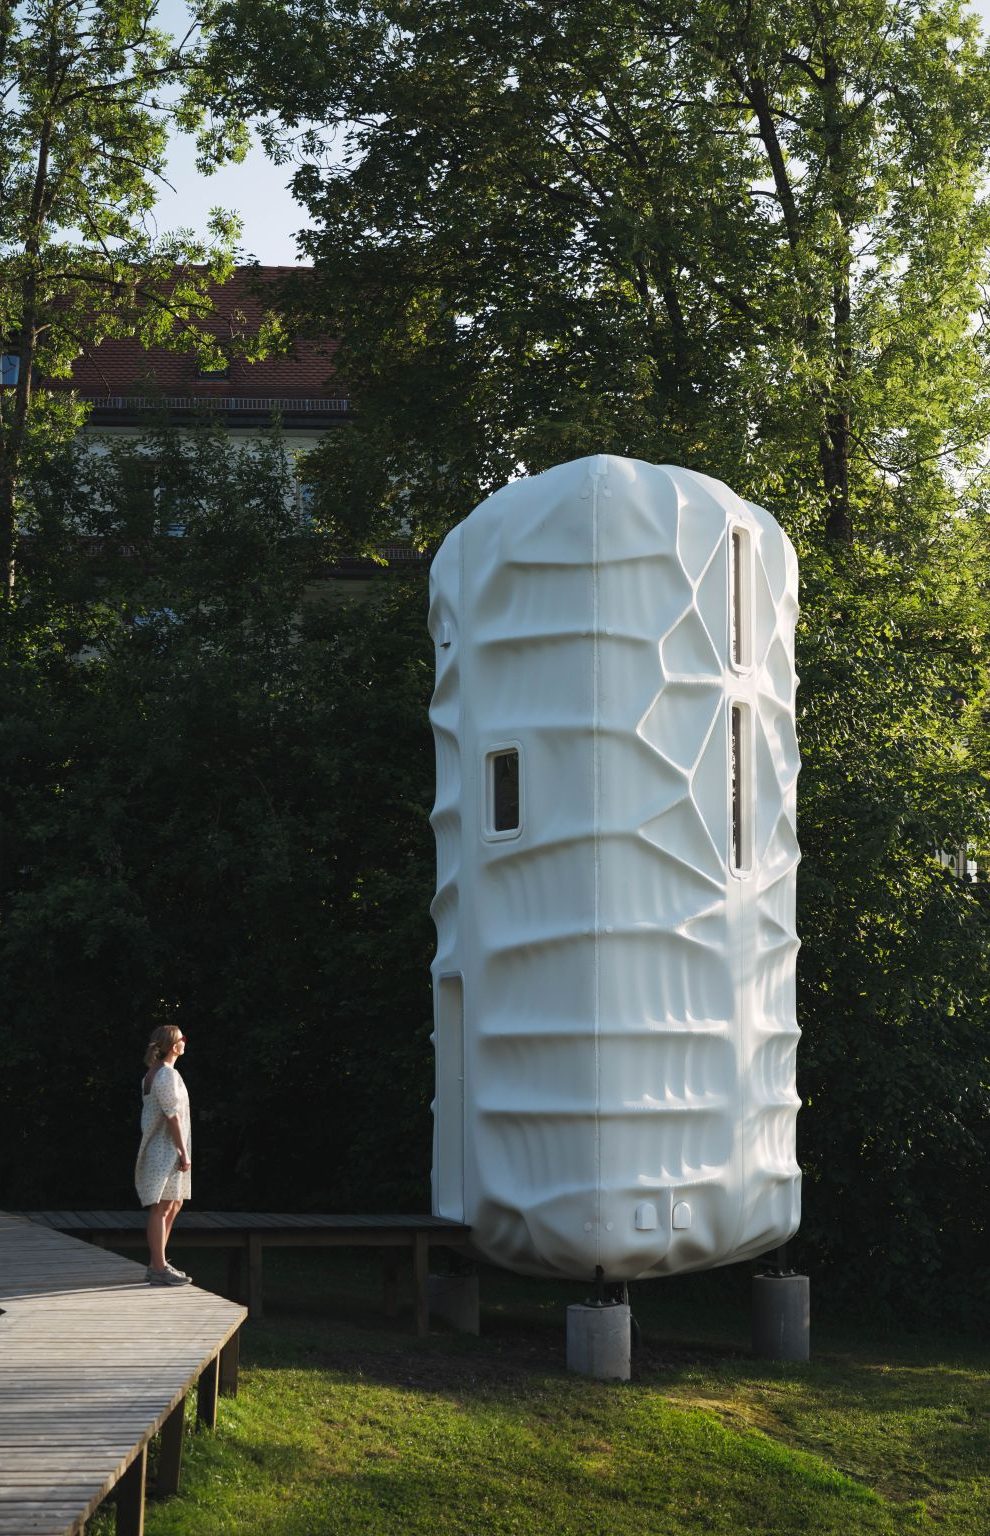 SAGA Space Architects 3D print 7-meter-tall analog moon habitat Professional Additive Manufacturing